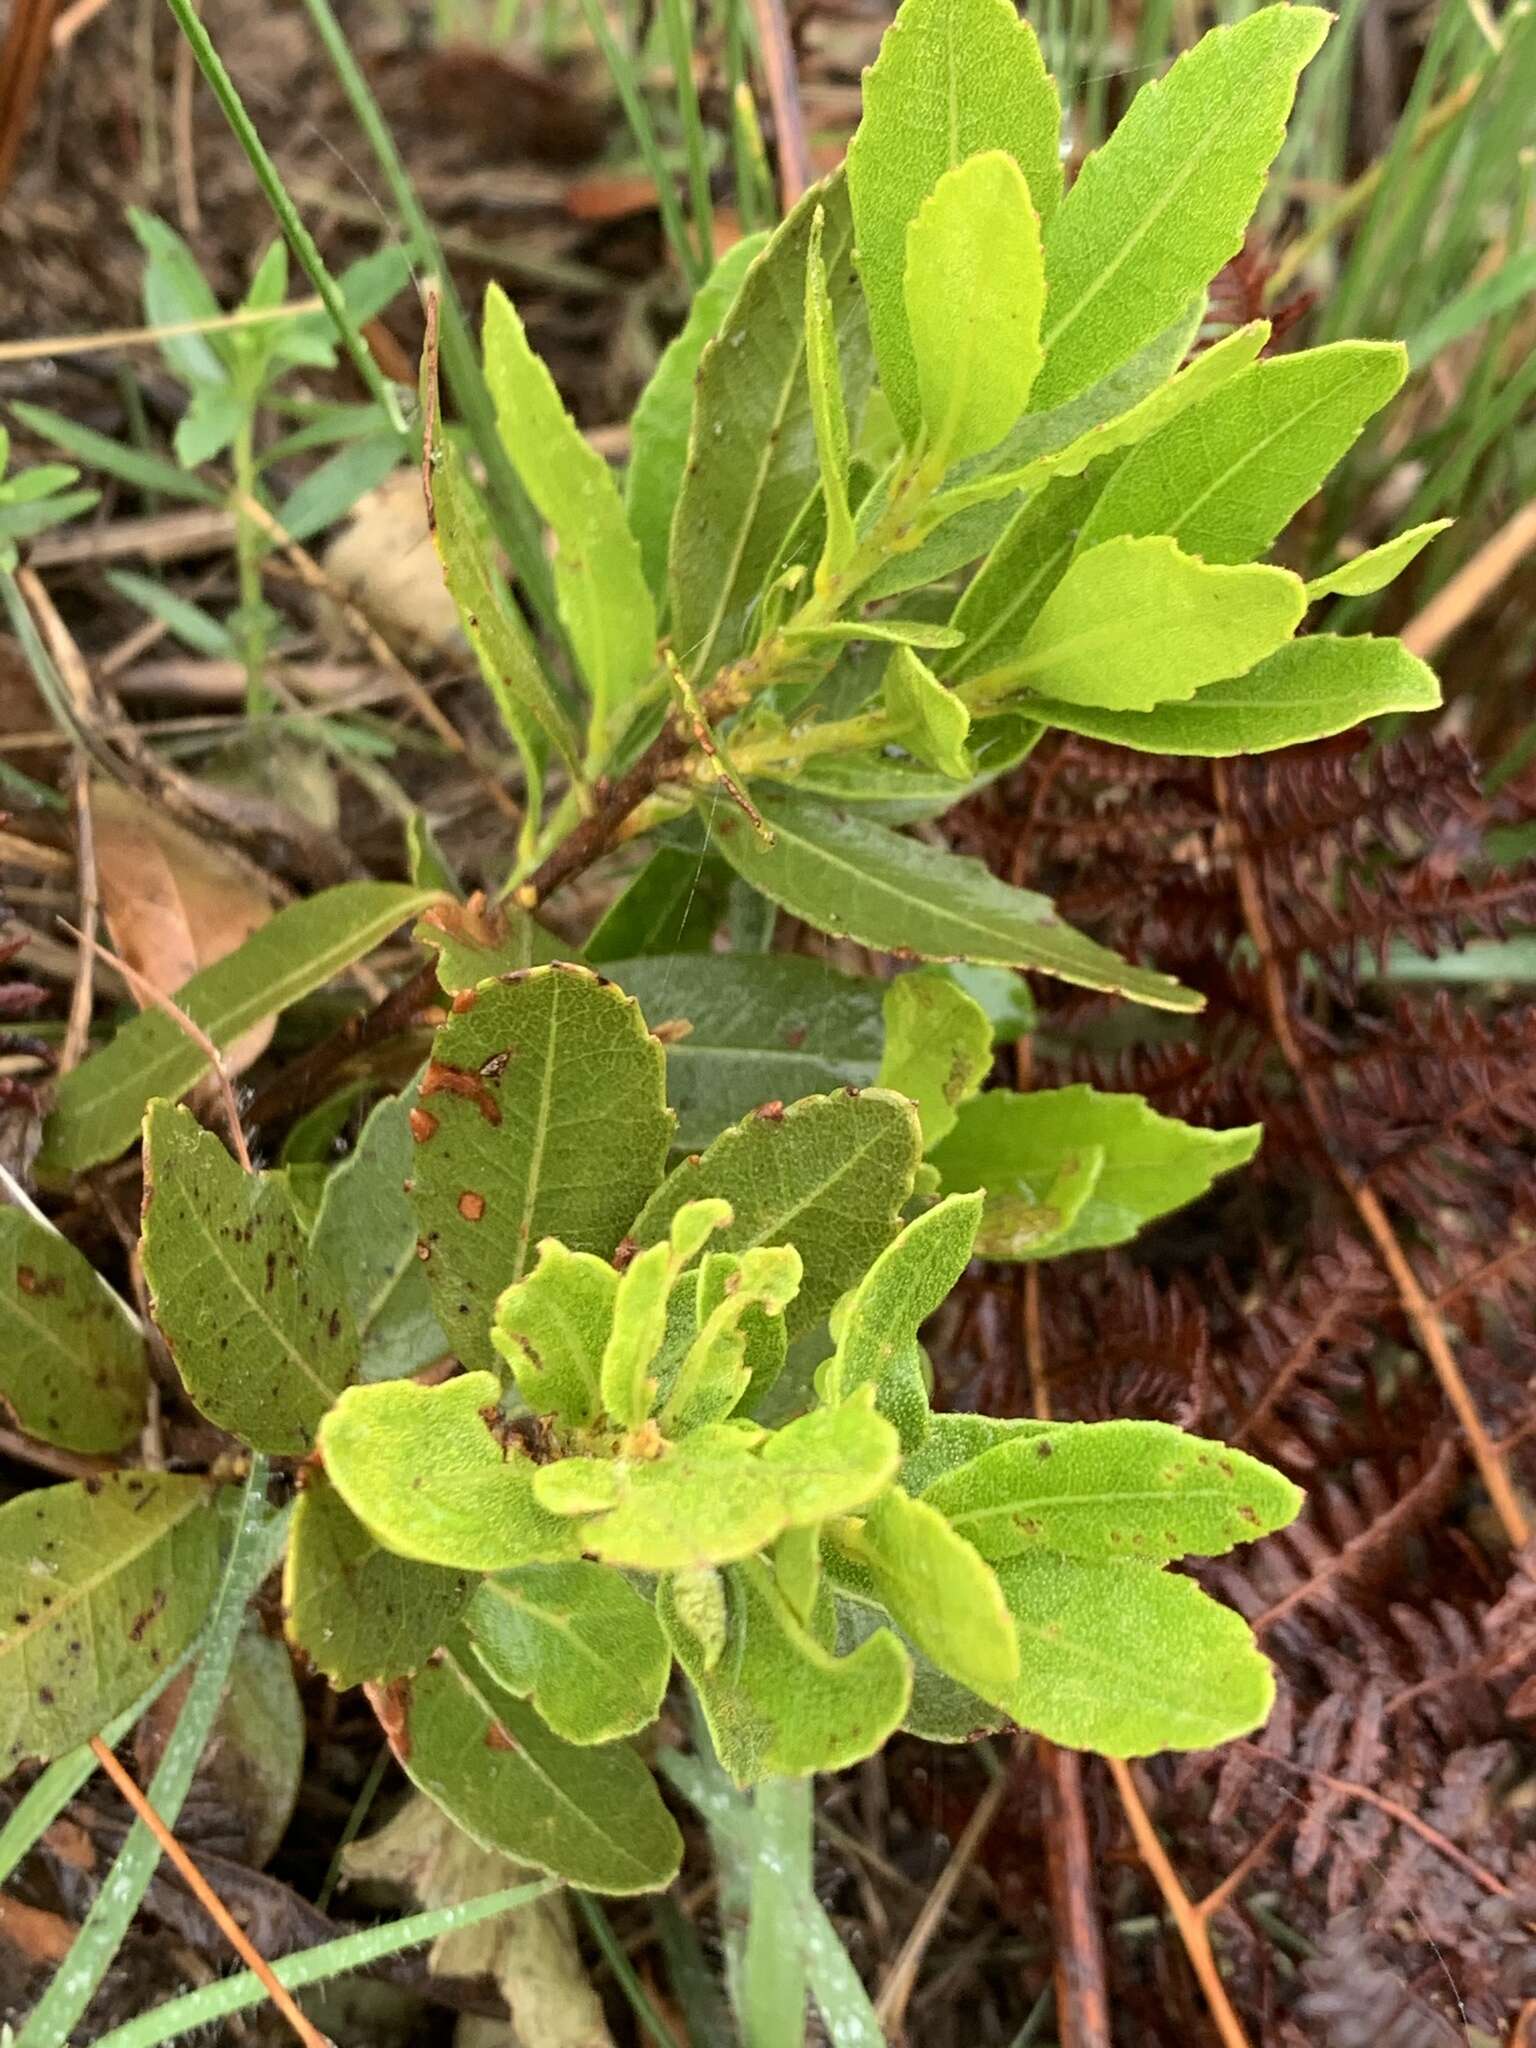 Image of Morella brevifolia (E. Mey. ex C. DC.) D. J. B. Killick